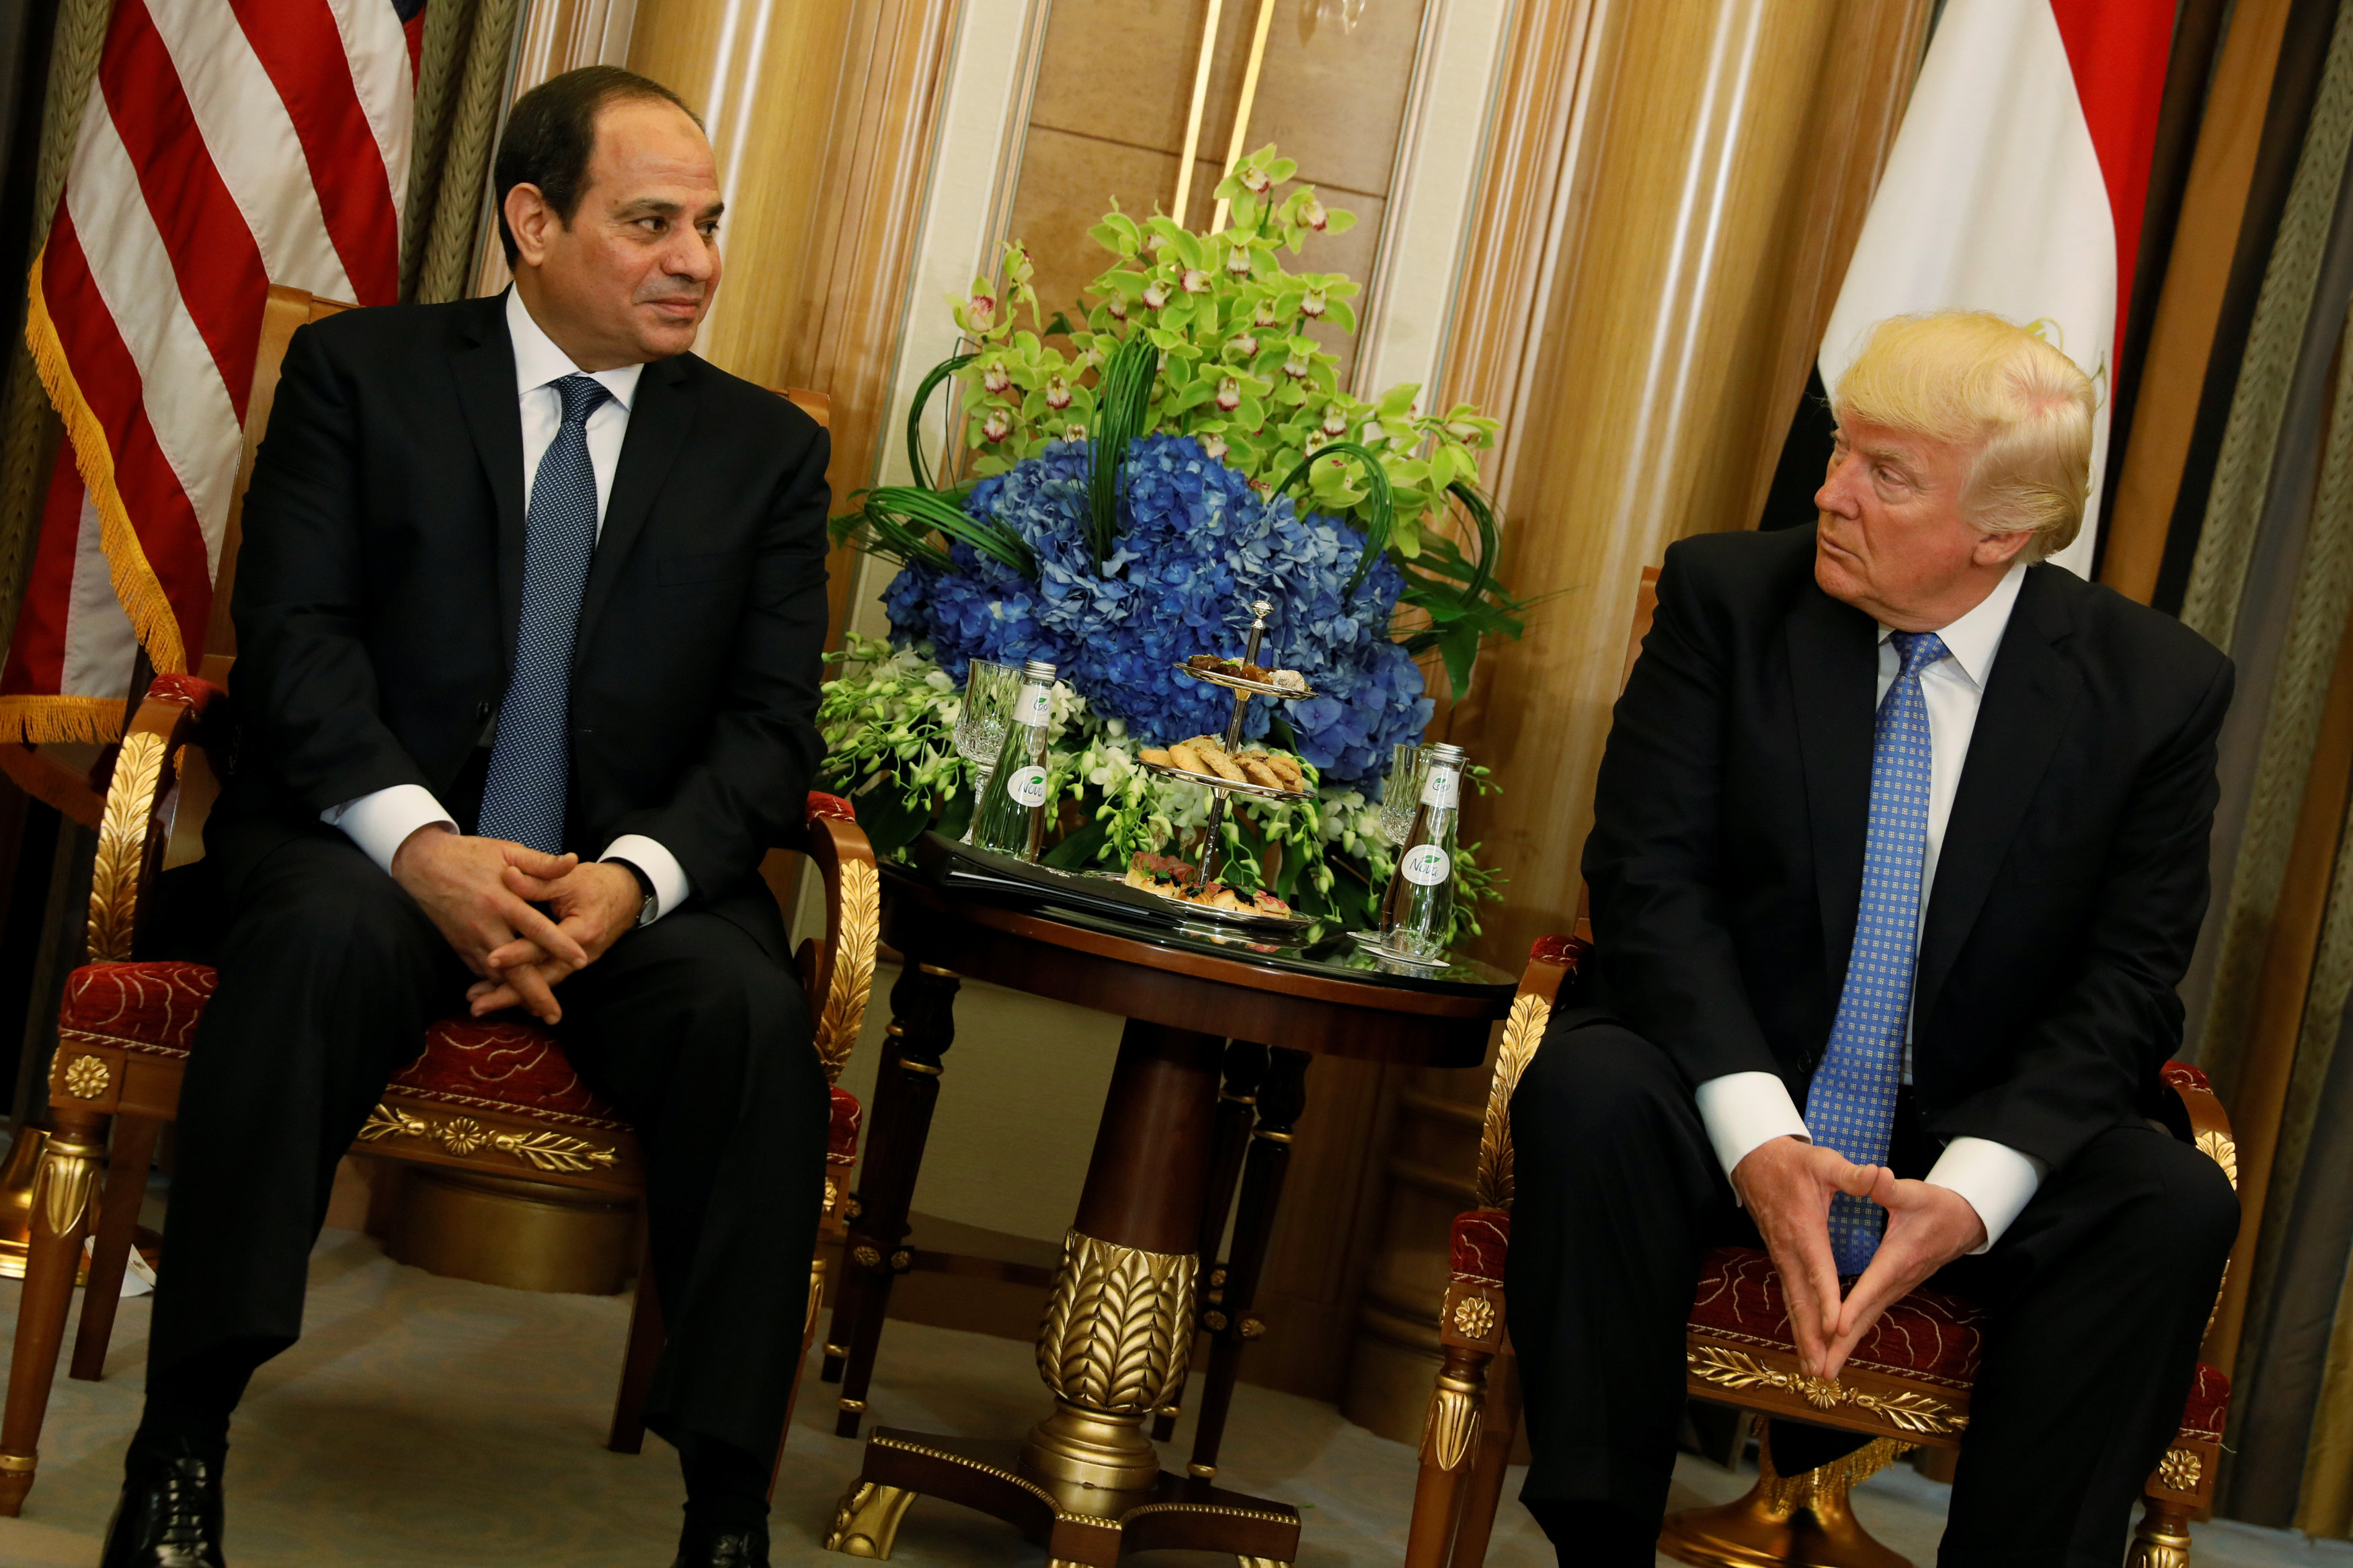 Trump praises Sisi, says he hopes to visit Egypt